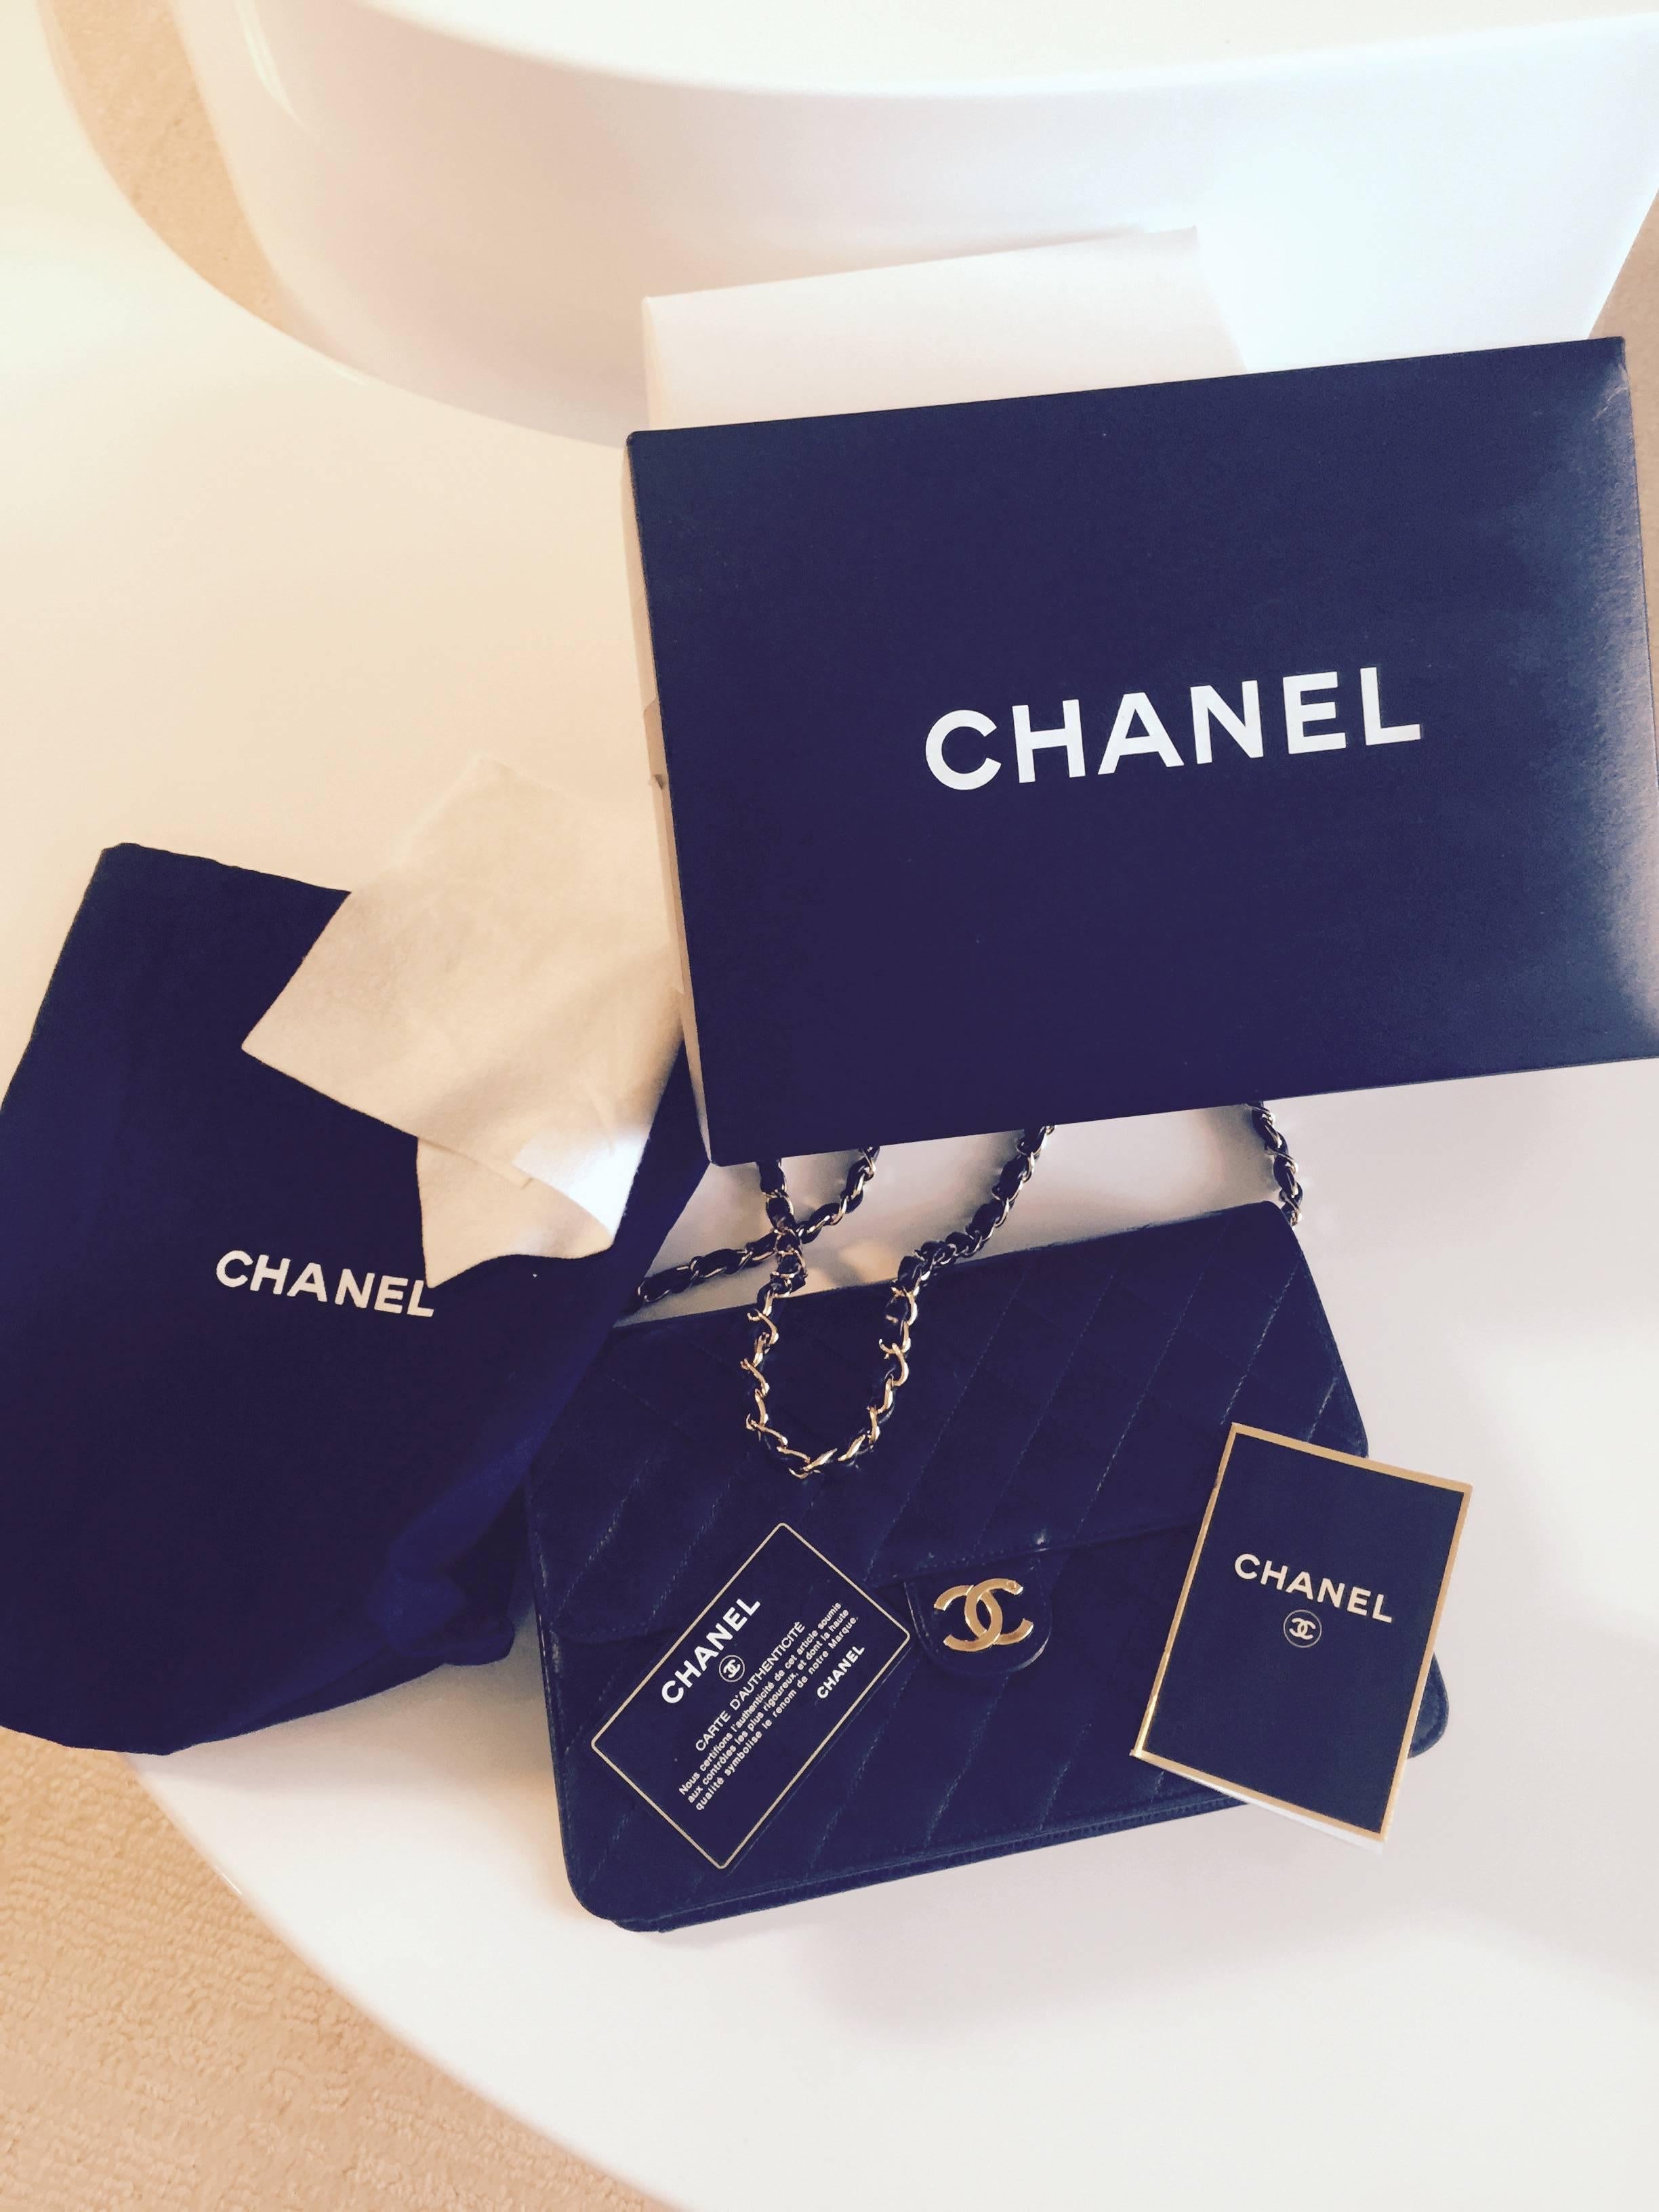 French Classic Chanel Handbag For Sale